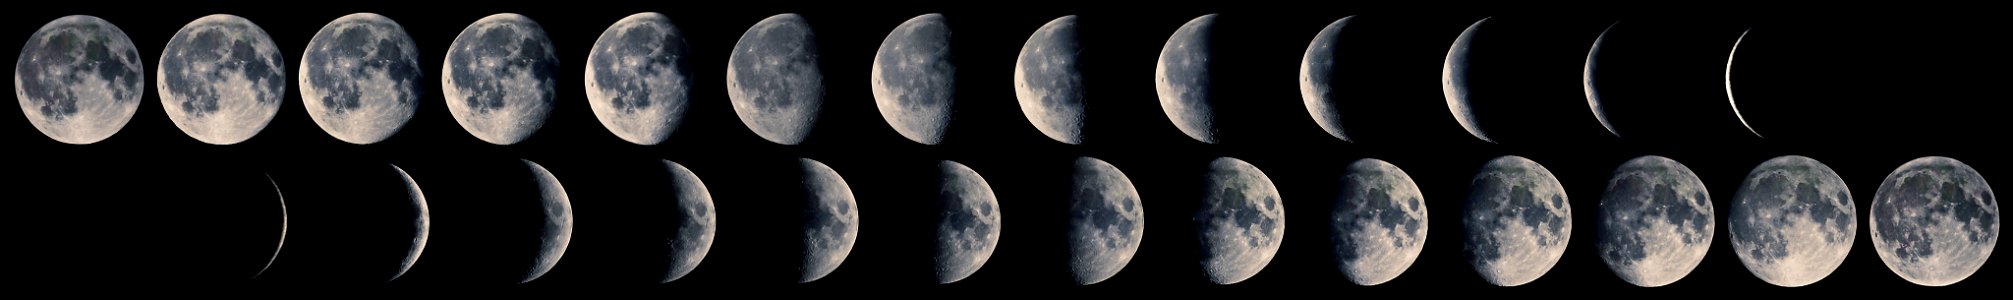 Moon phases #1 photo